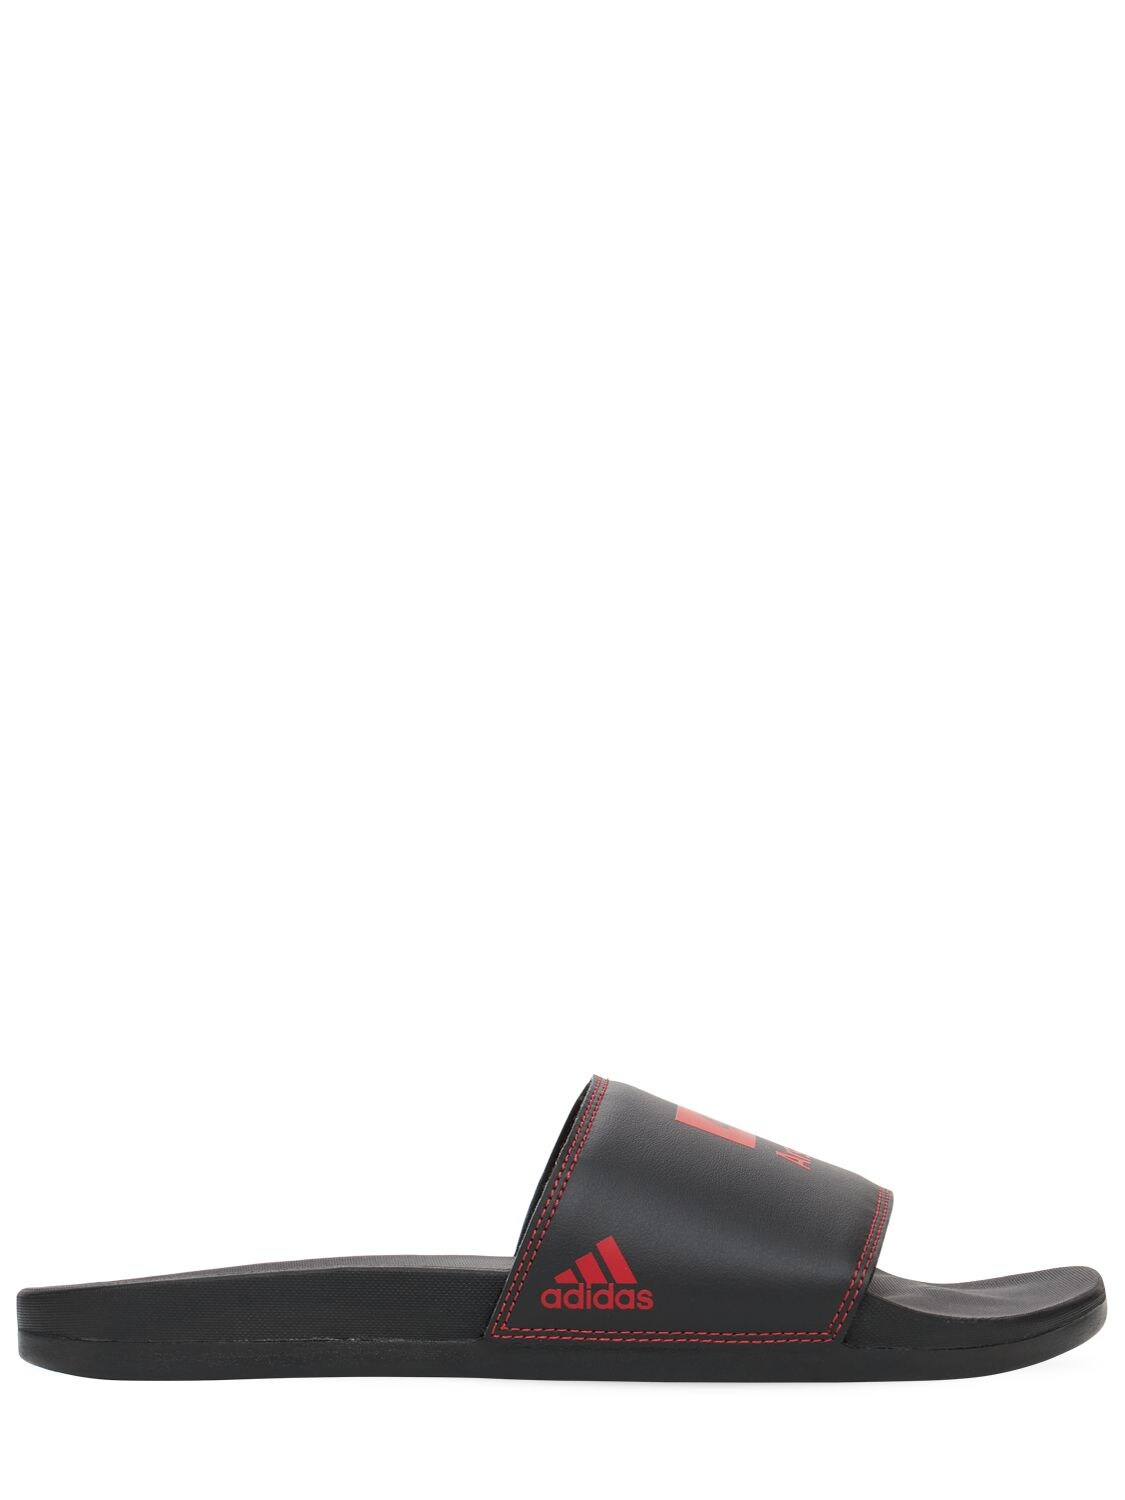 Adidas Originals Statement Afc X 424 Adilette Comfort Slide Sandals In Black